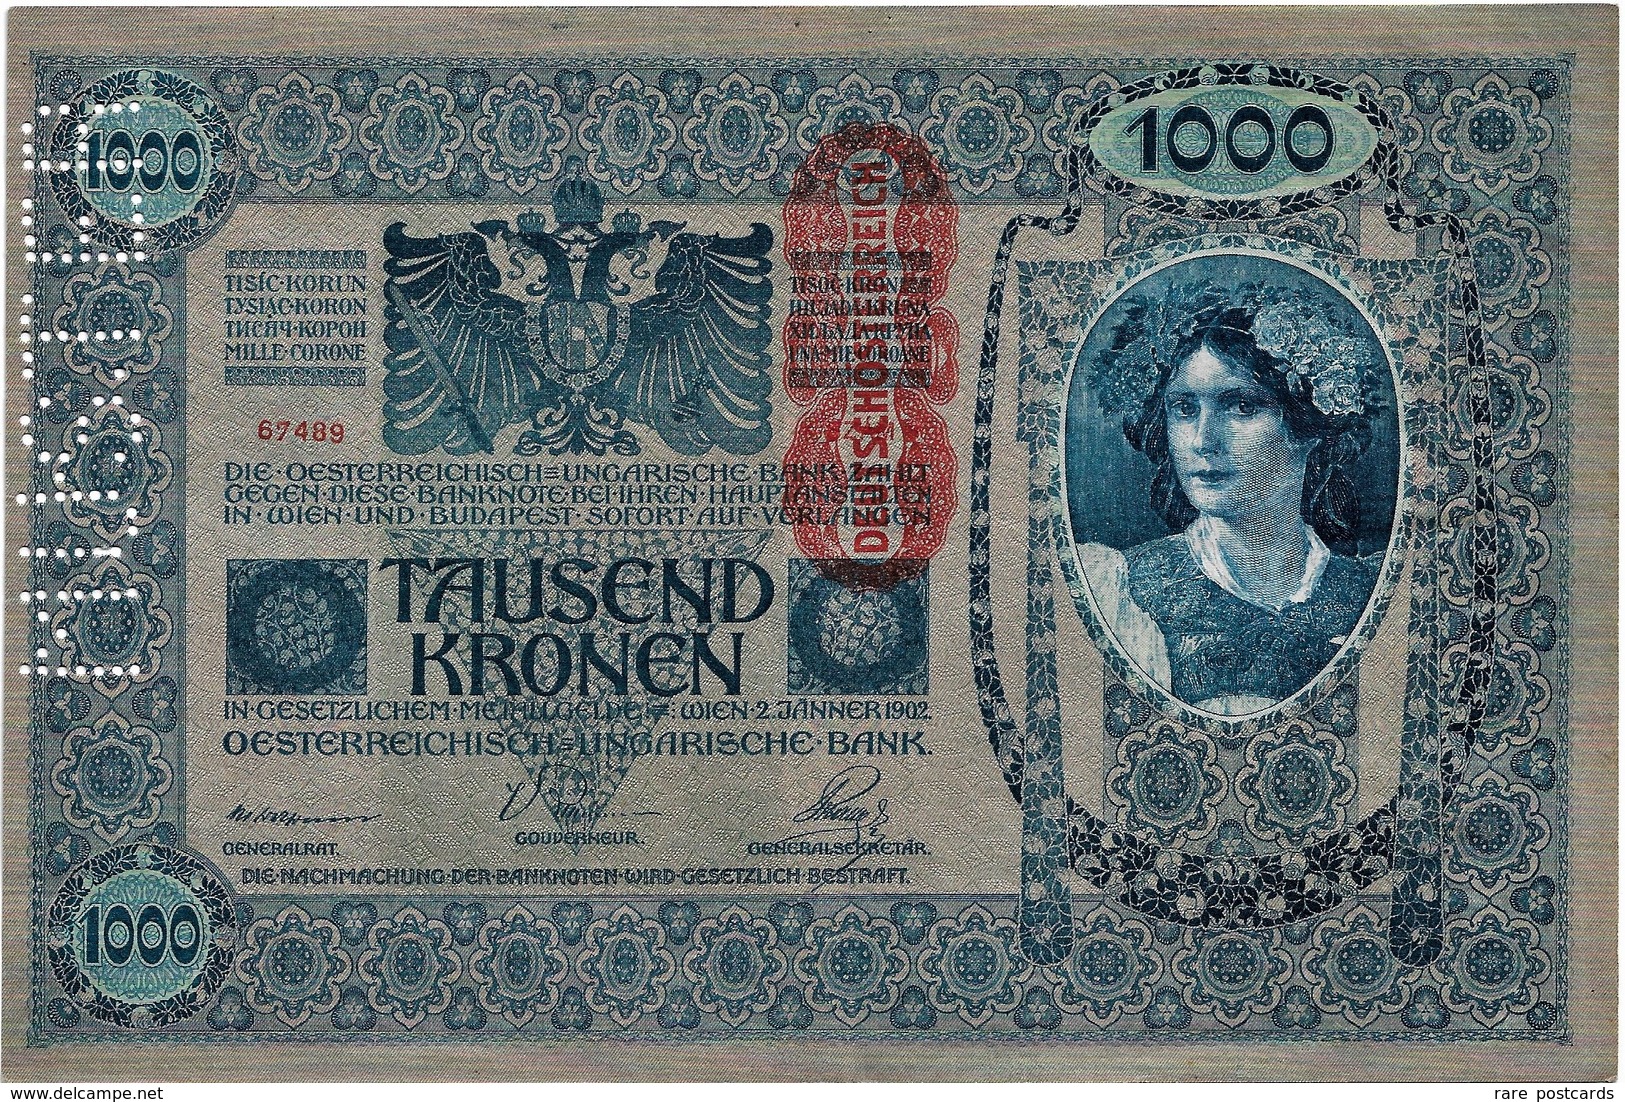 START 0.99e - MUSTER - Austro-Hungary 1000 Kronen 1902. Xf - Specimen - Mega Rare In This Form - Austria - Hungary - Austria